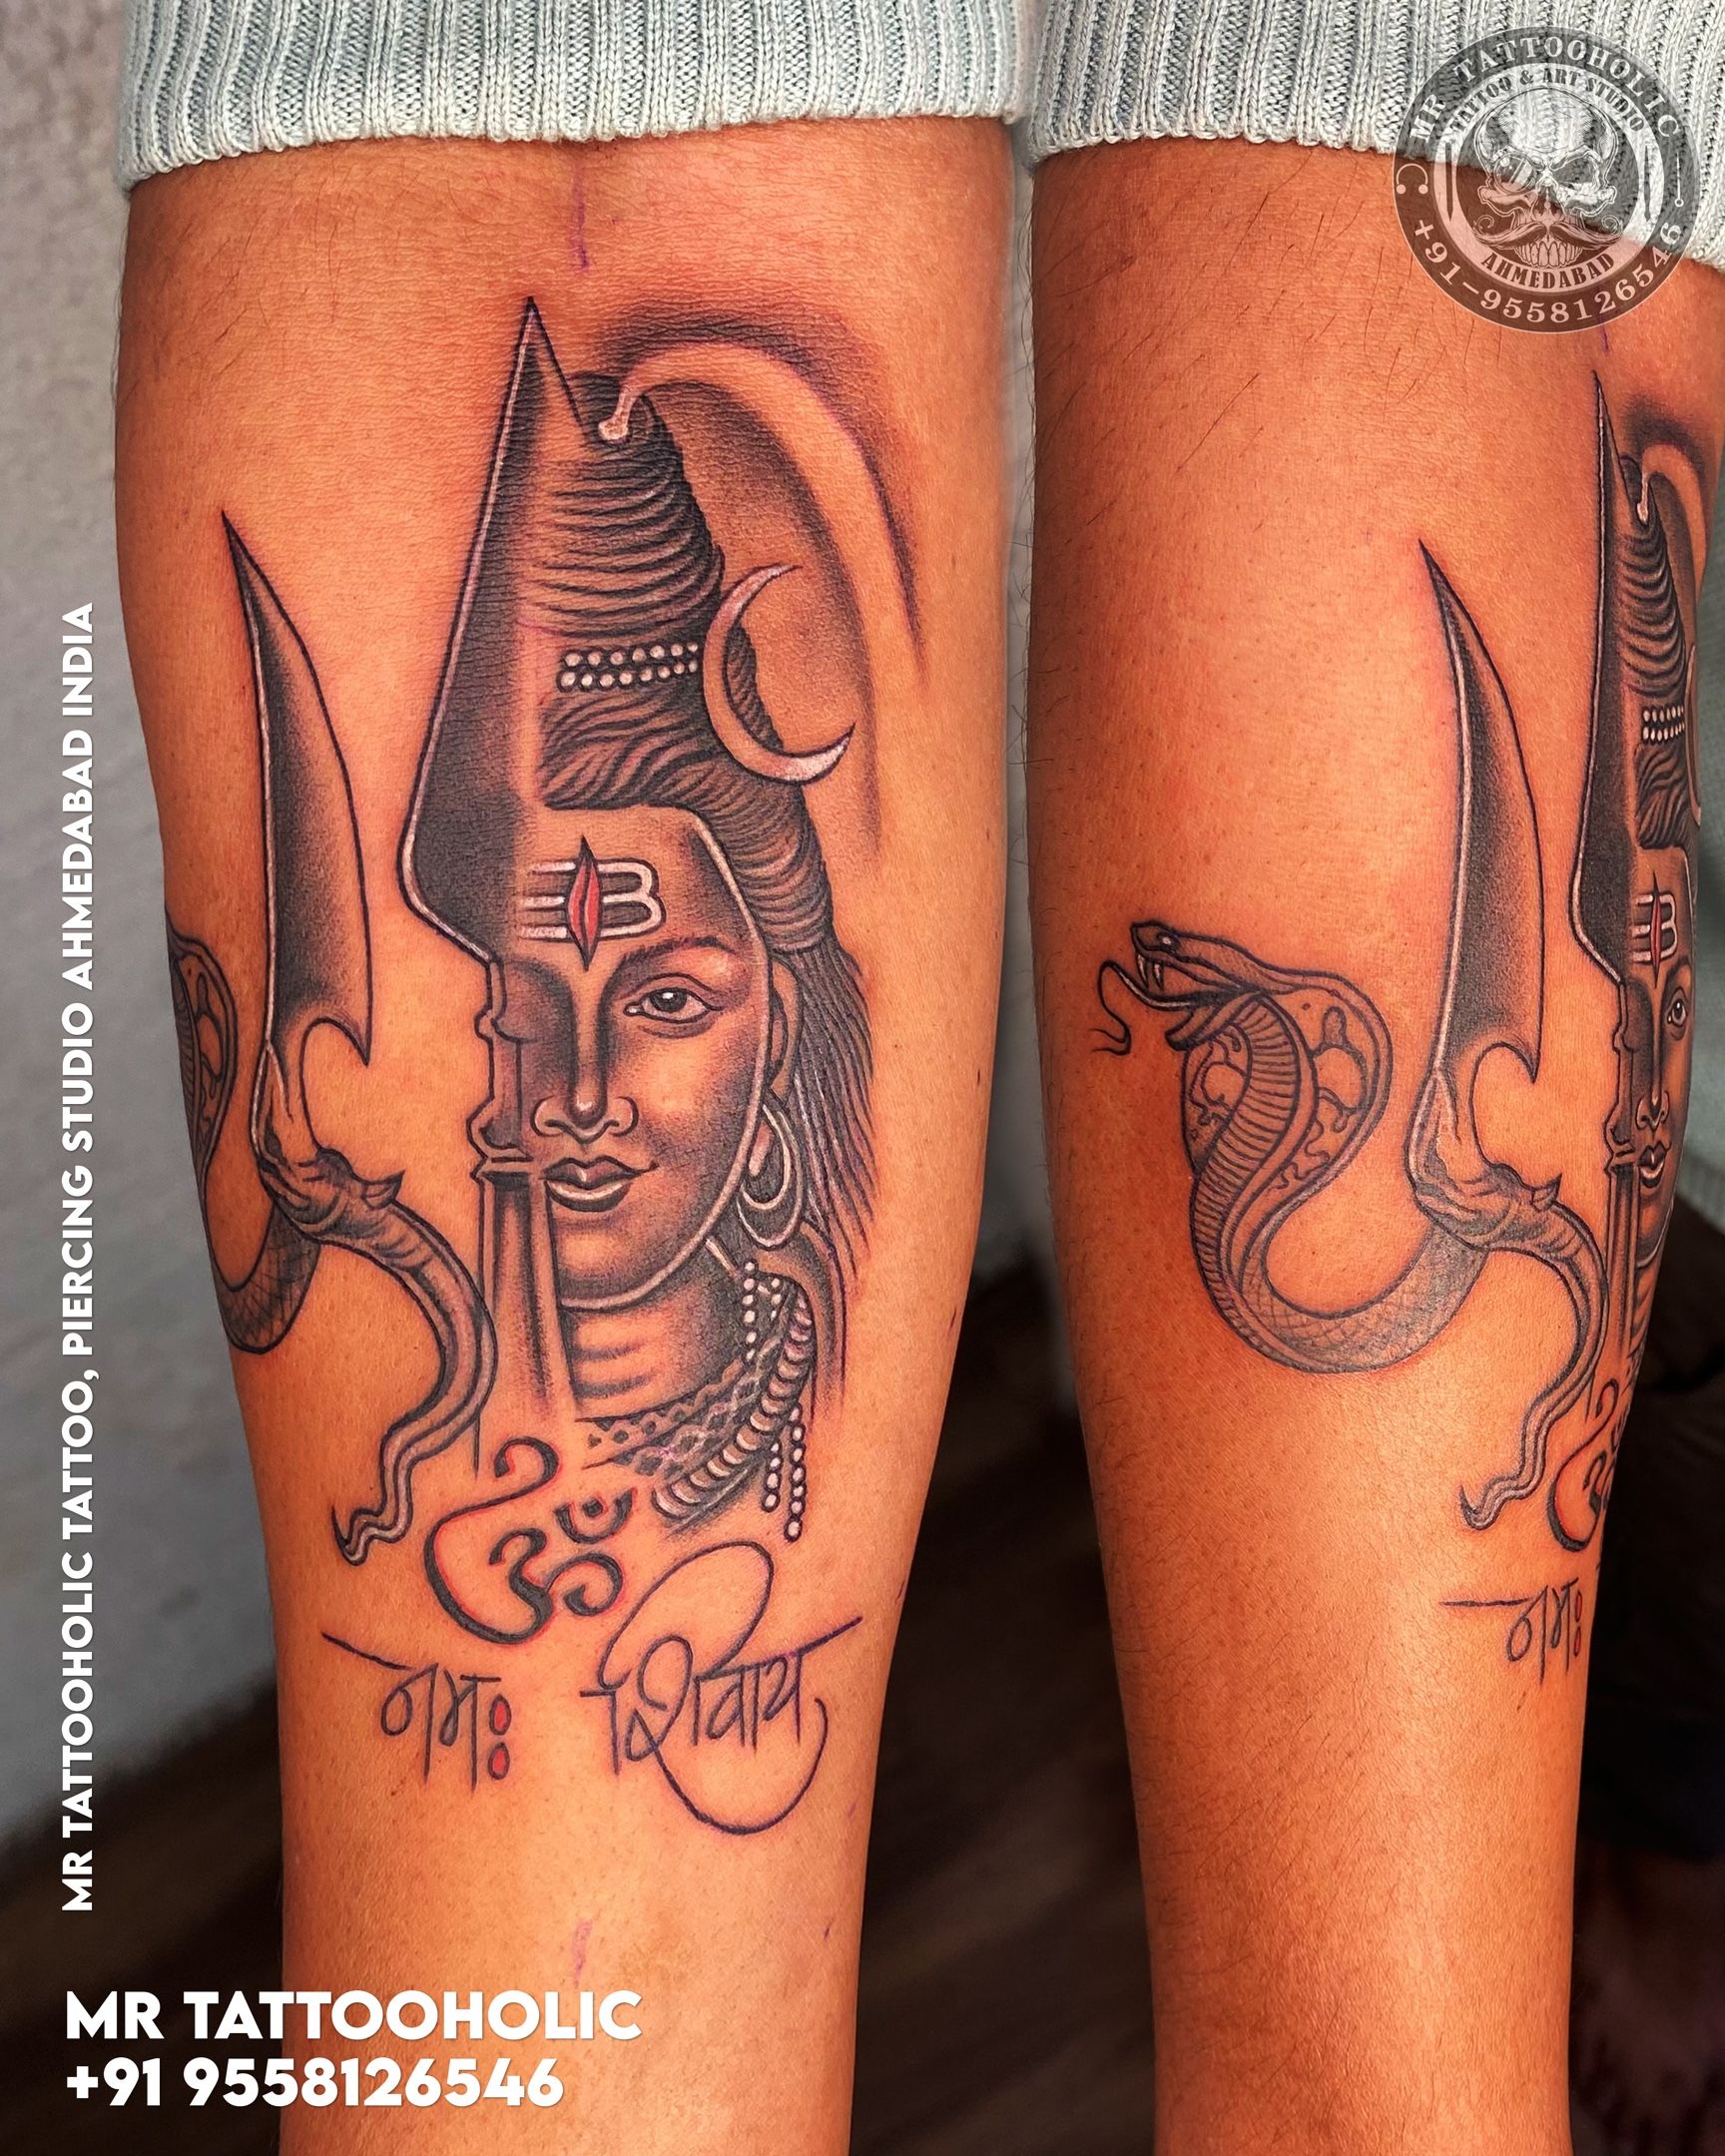 Black and White Arm Tattoo by Shivam